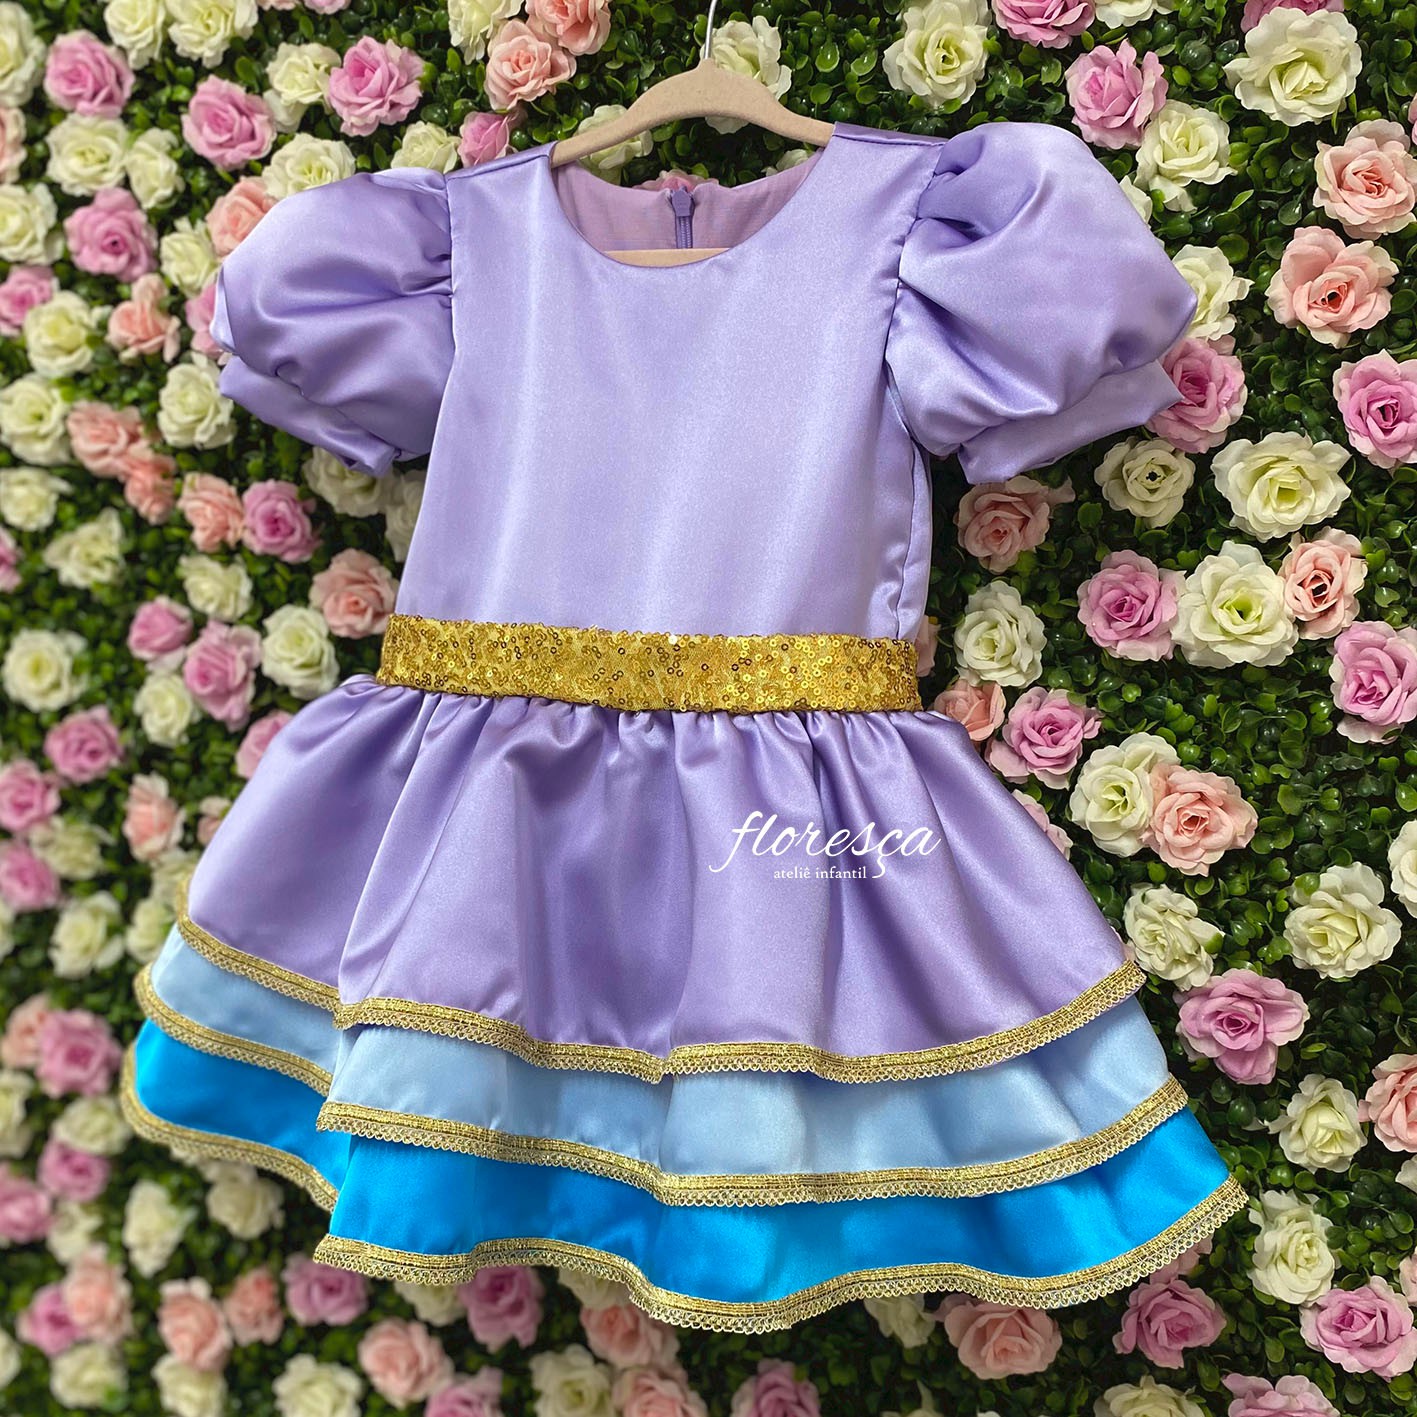 Vestido Infantil Princesa Sofia Lilás Fantasia Aniversário